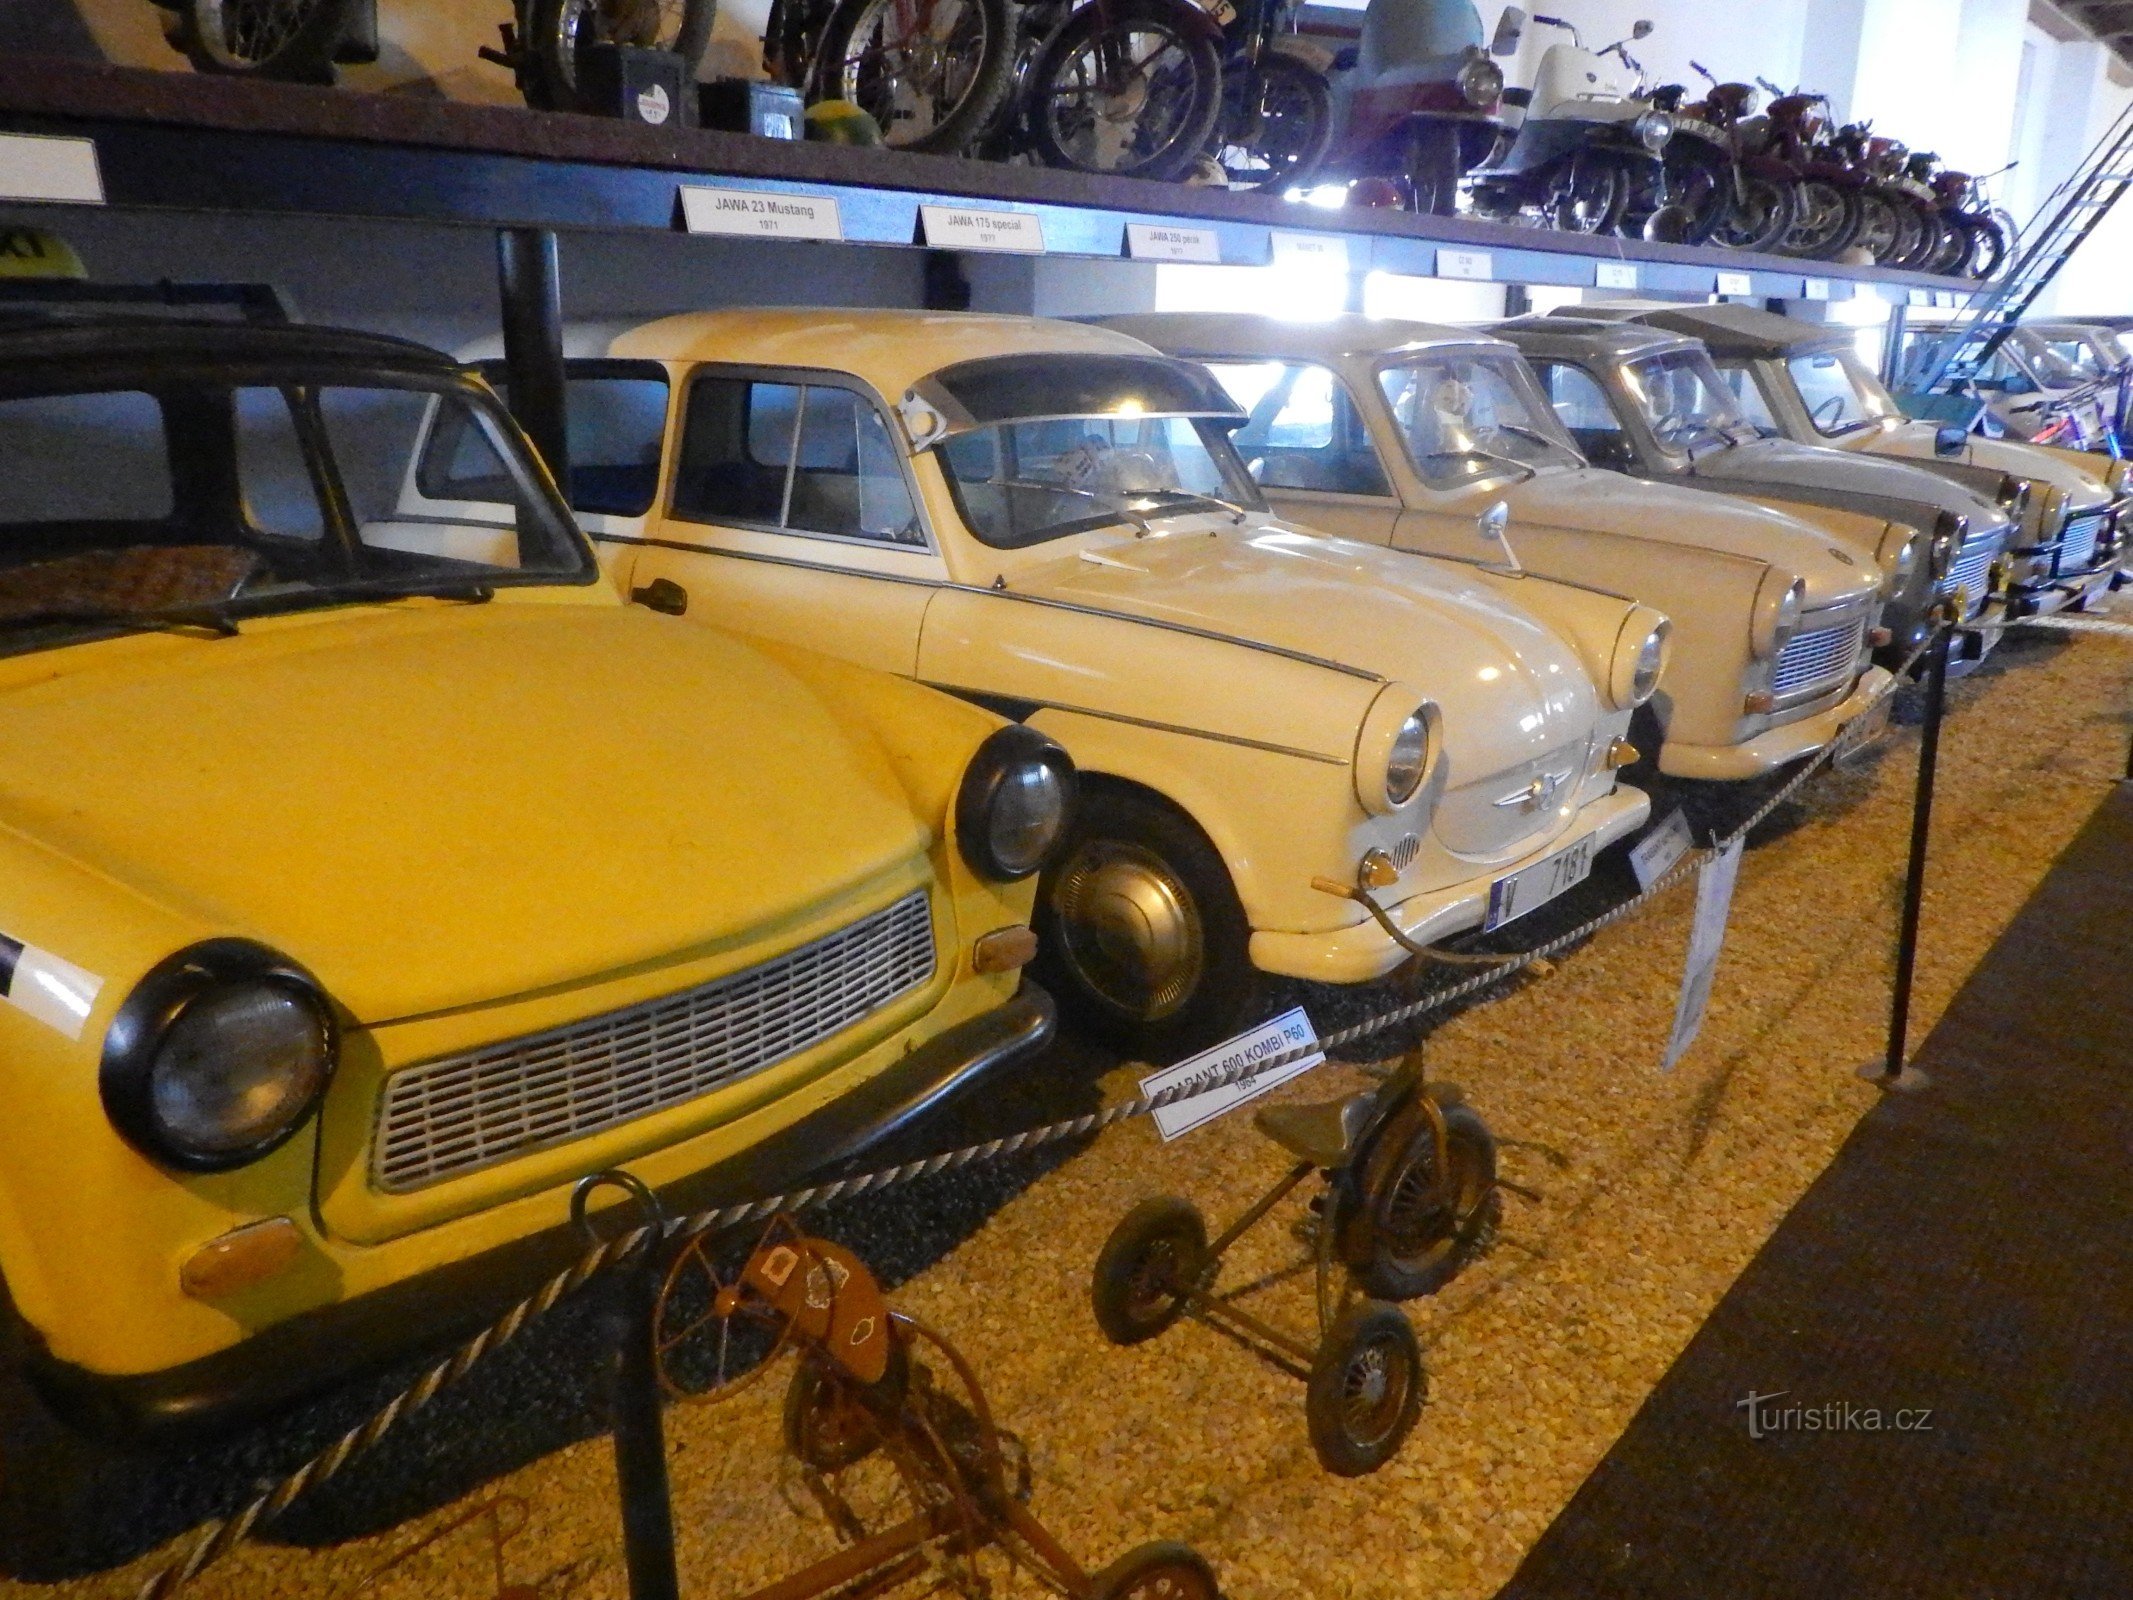 Museo del automóvil en Terezín.